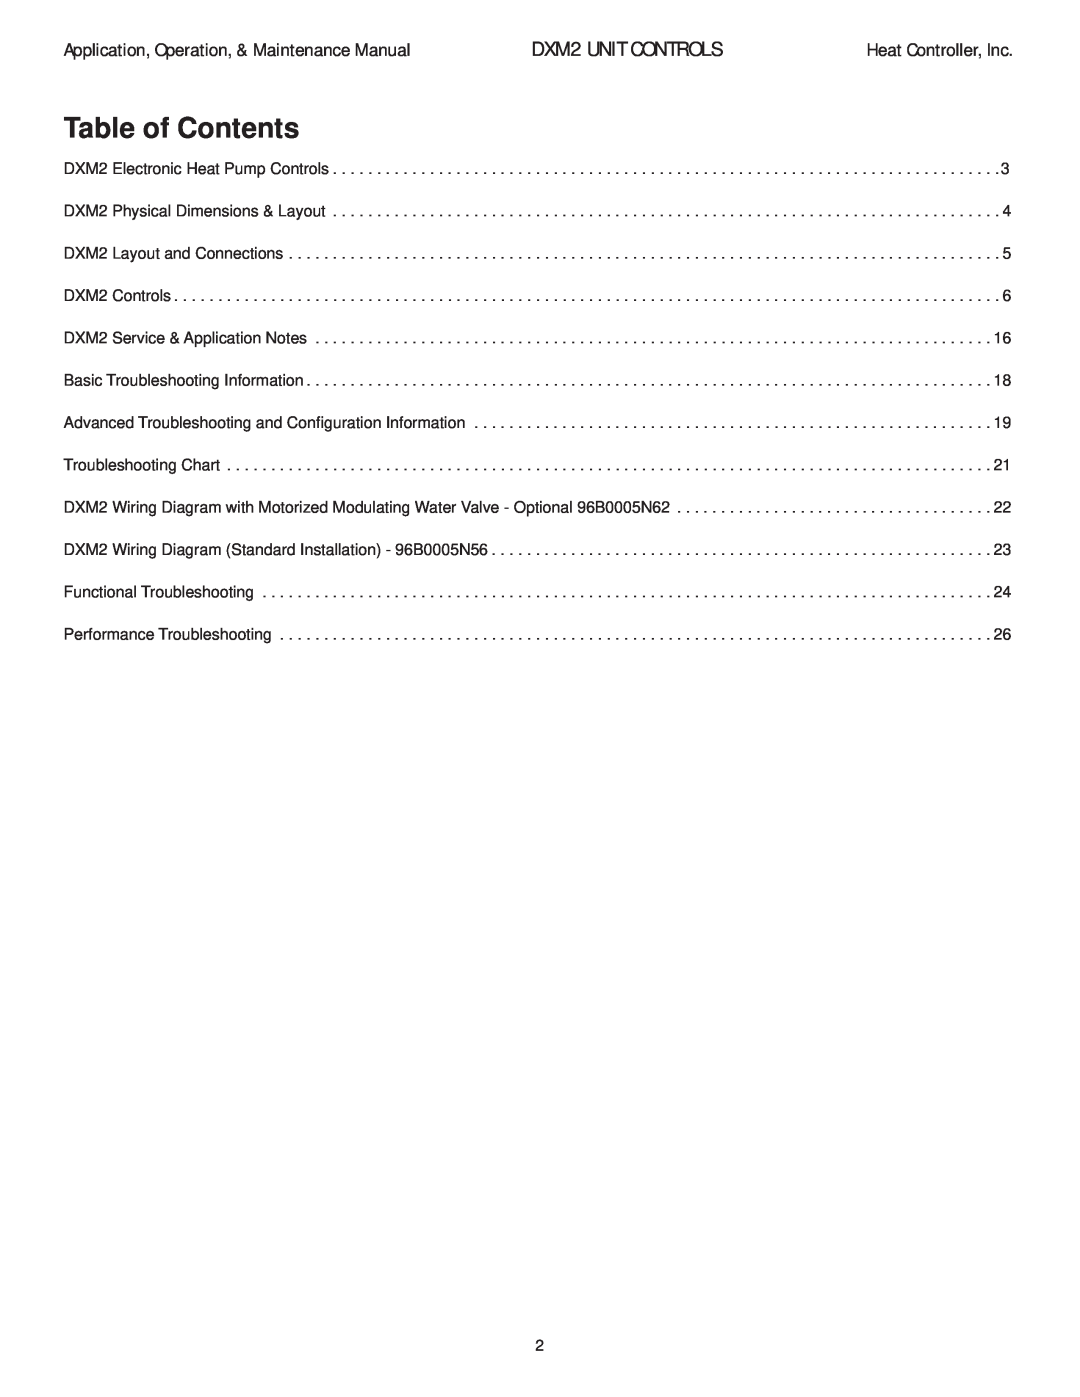 Heat Controller manual Table of Contents, DXM2 UNIT CONTROLS, Application, Operation, & Maintenance Manual 